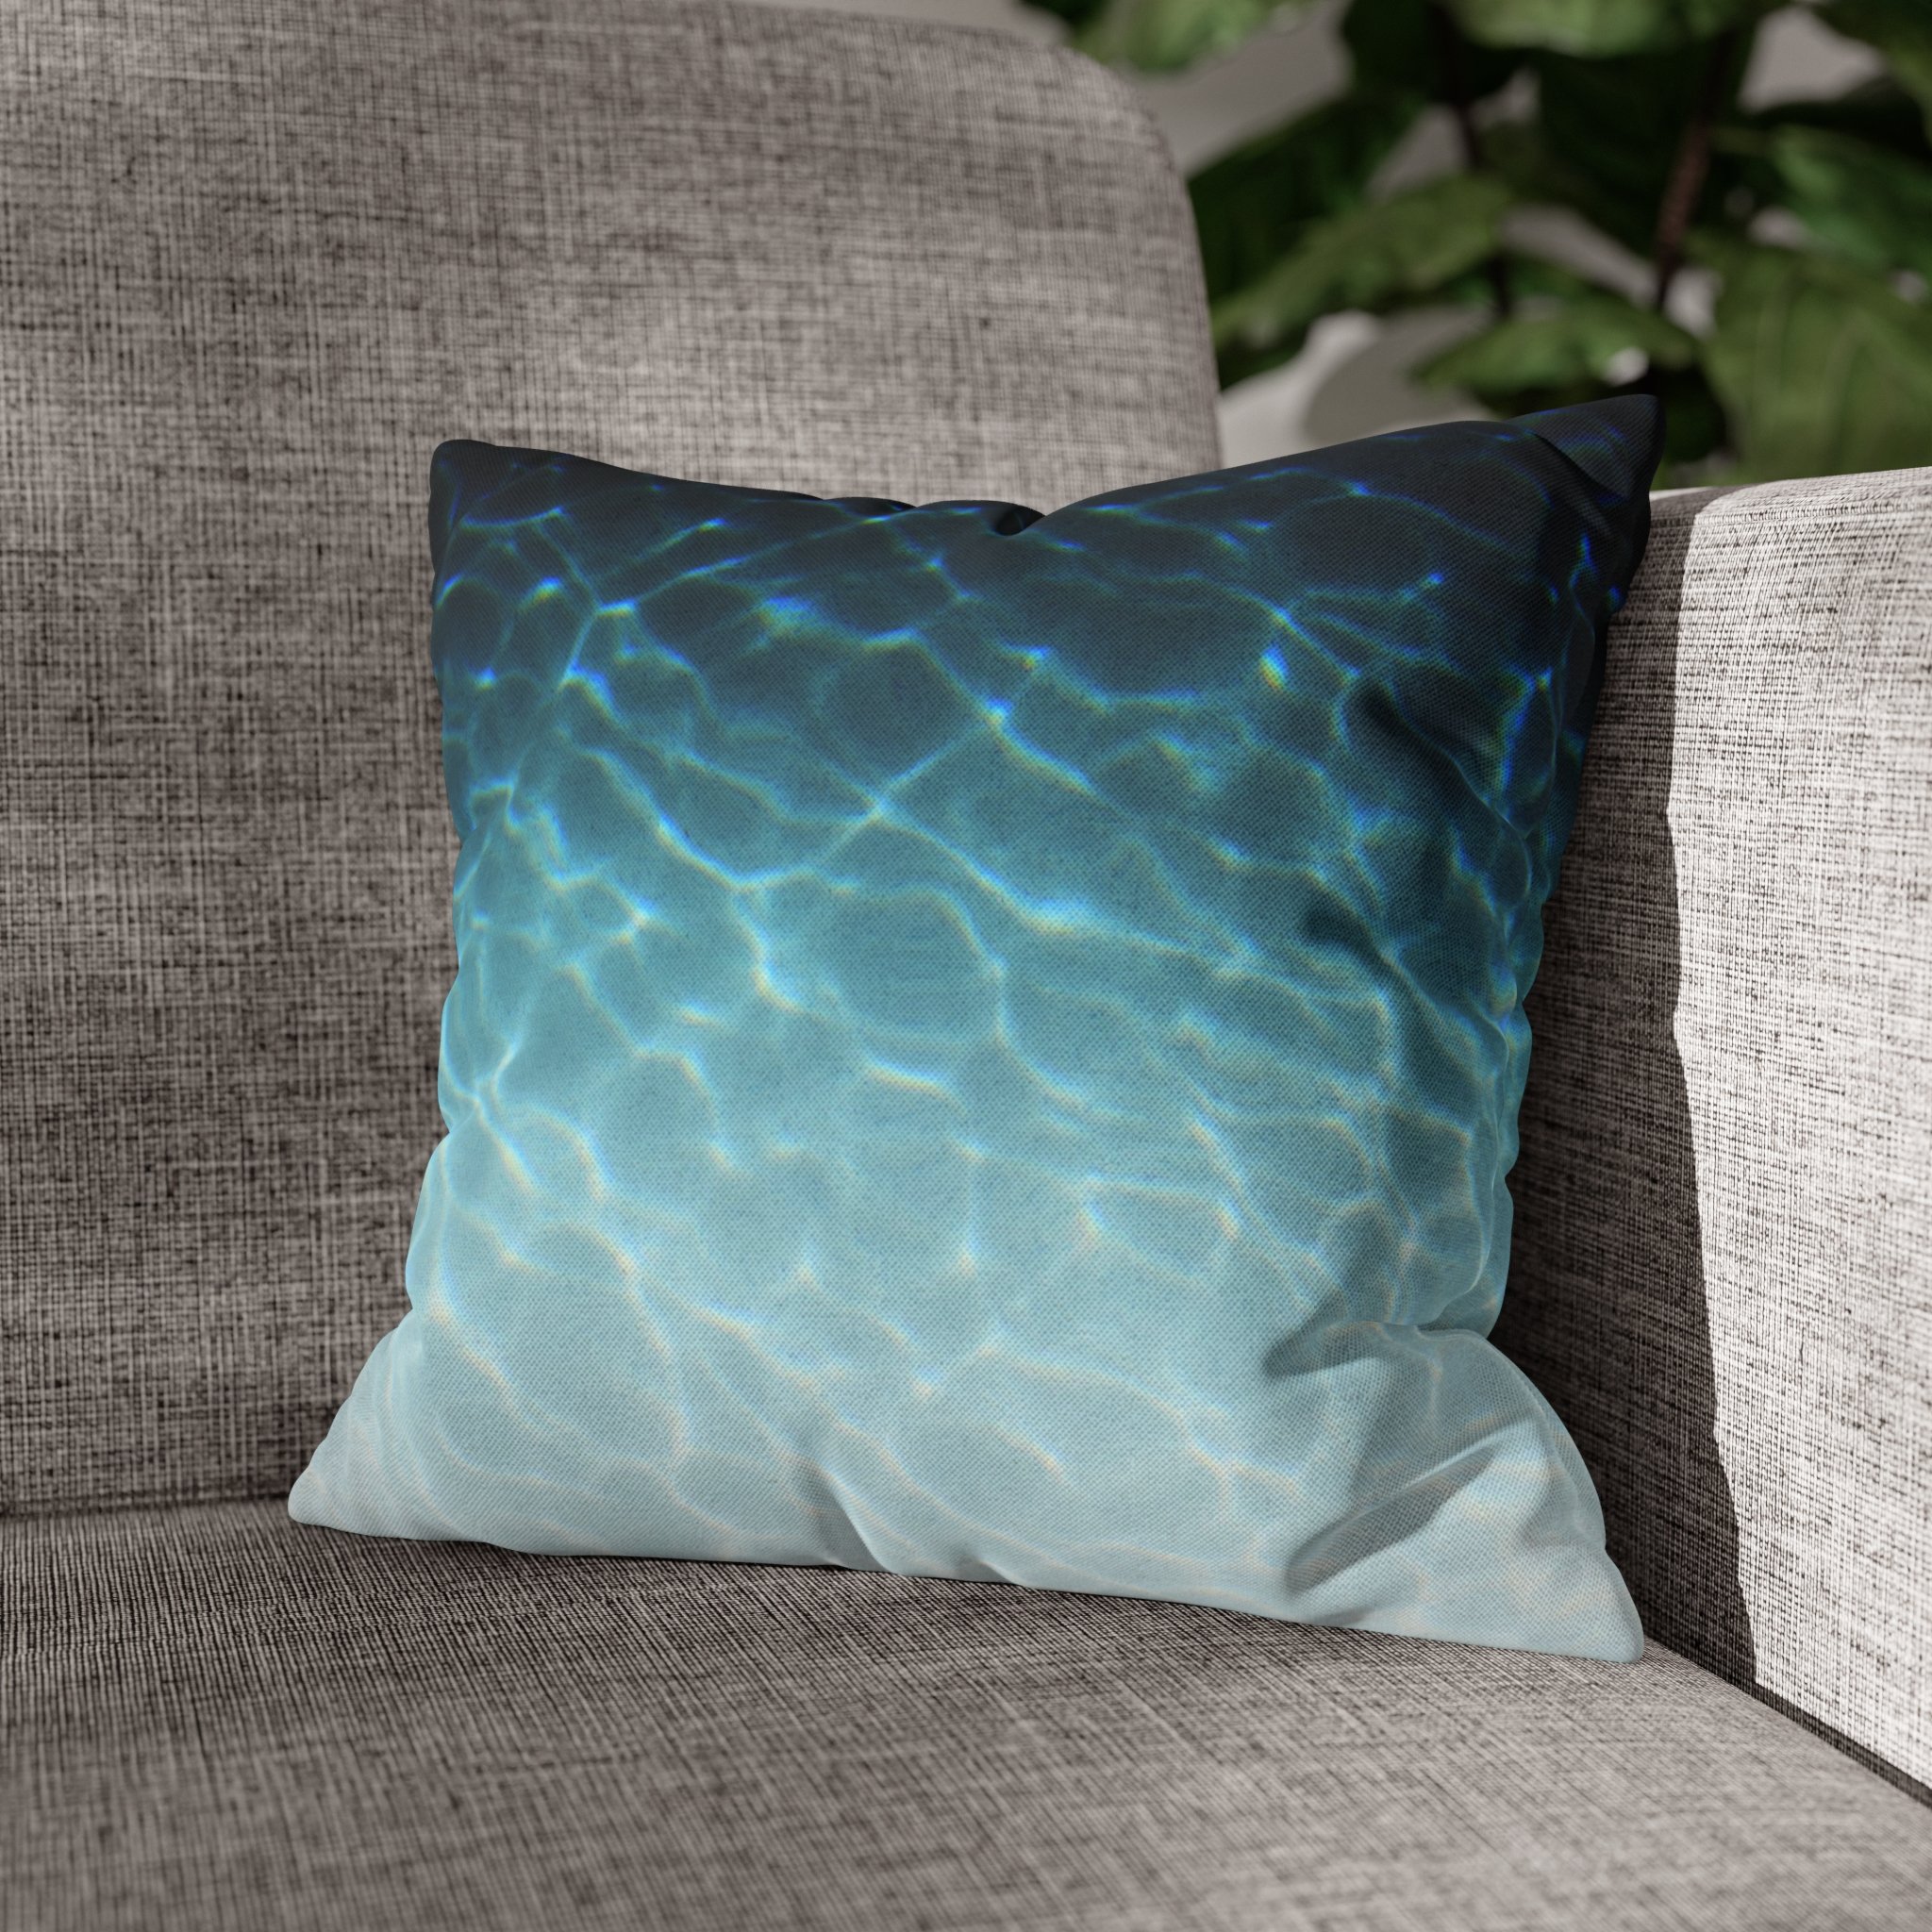 Blue Throw Pillows, Turquoise Gray White and Teal Coastal Beach